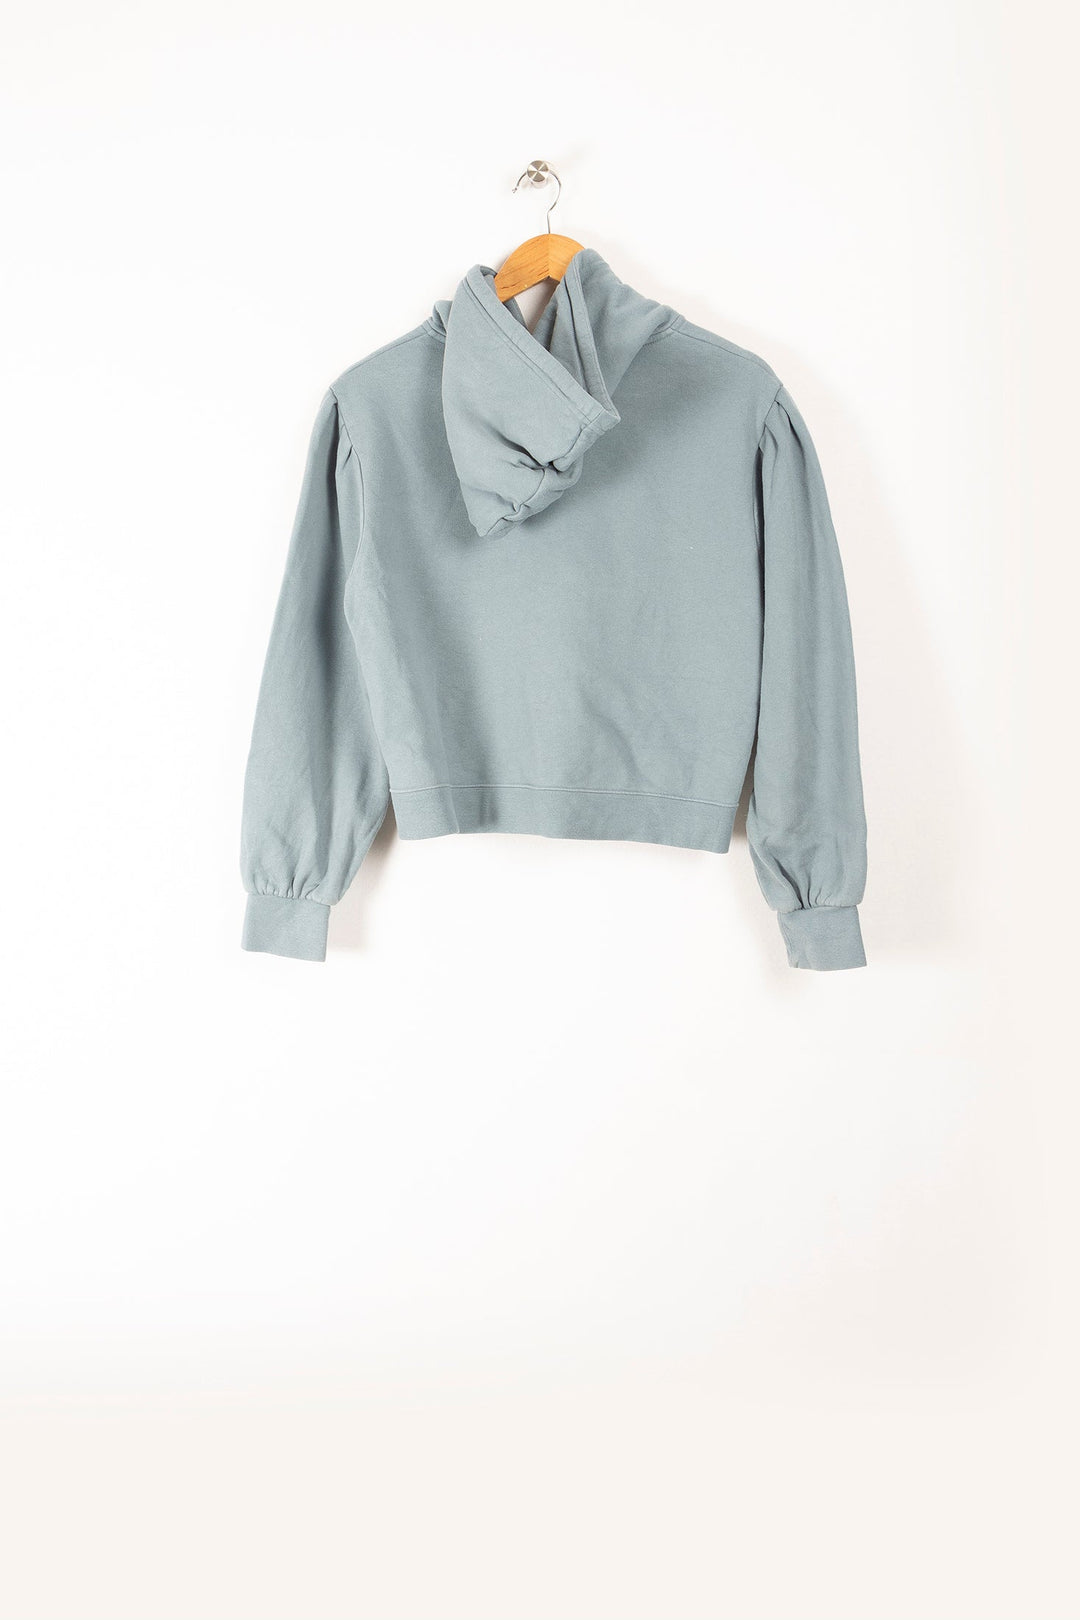 Sweatshirt - Size M / 38